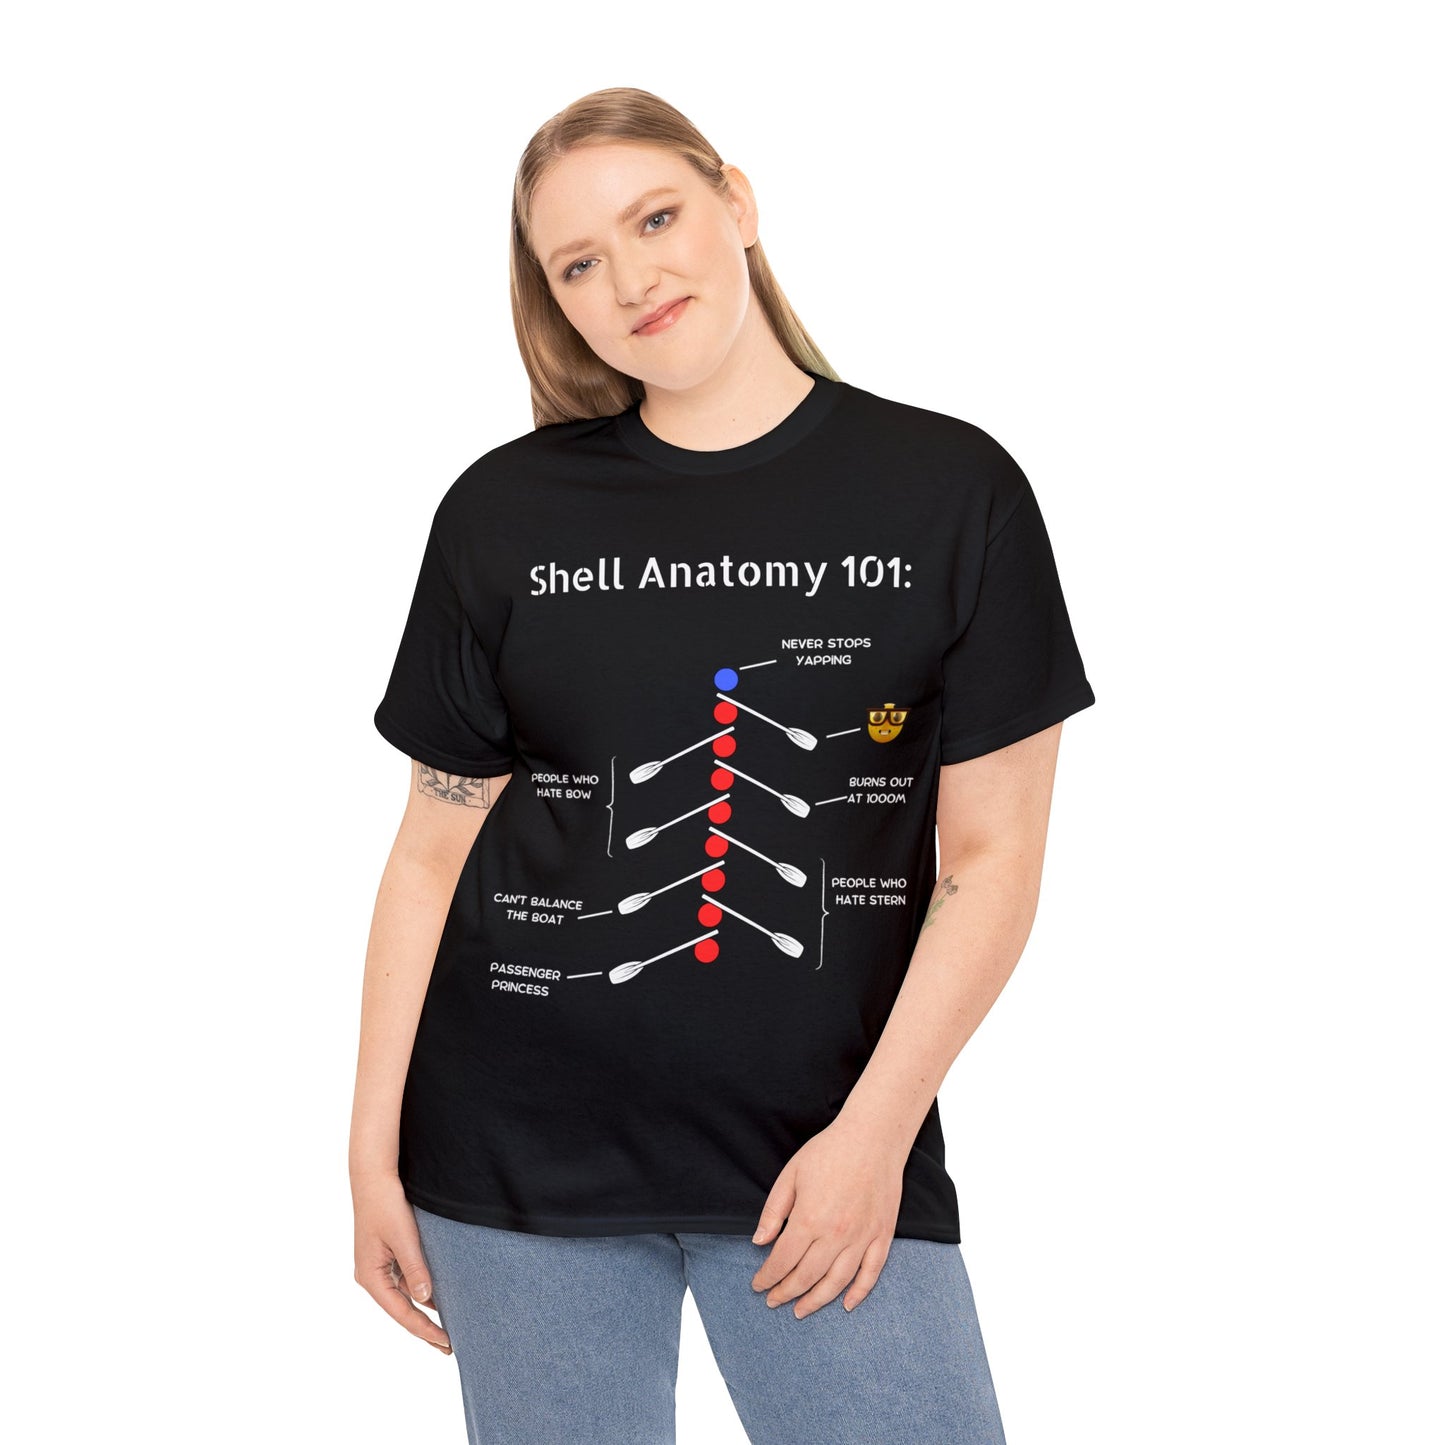 "Shell Anatomy 101" - Tee